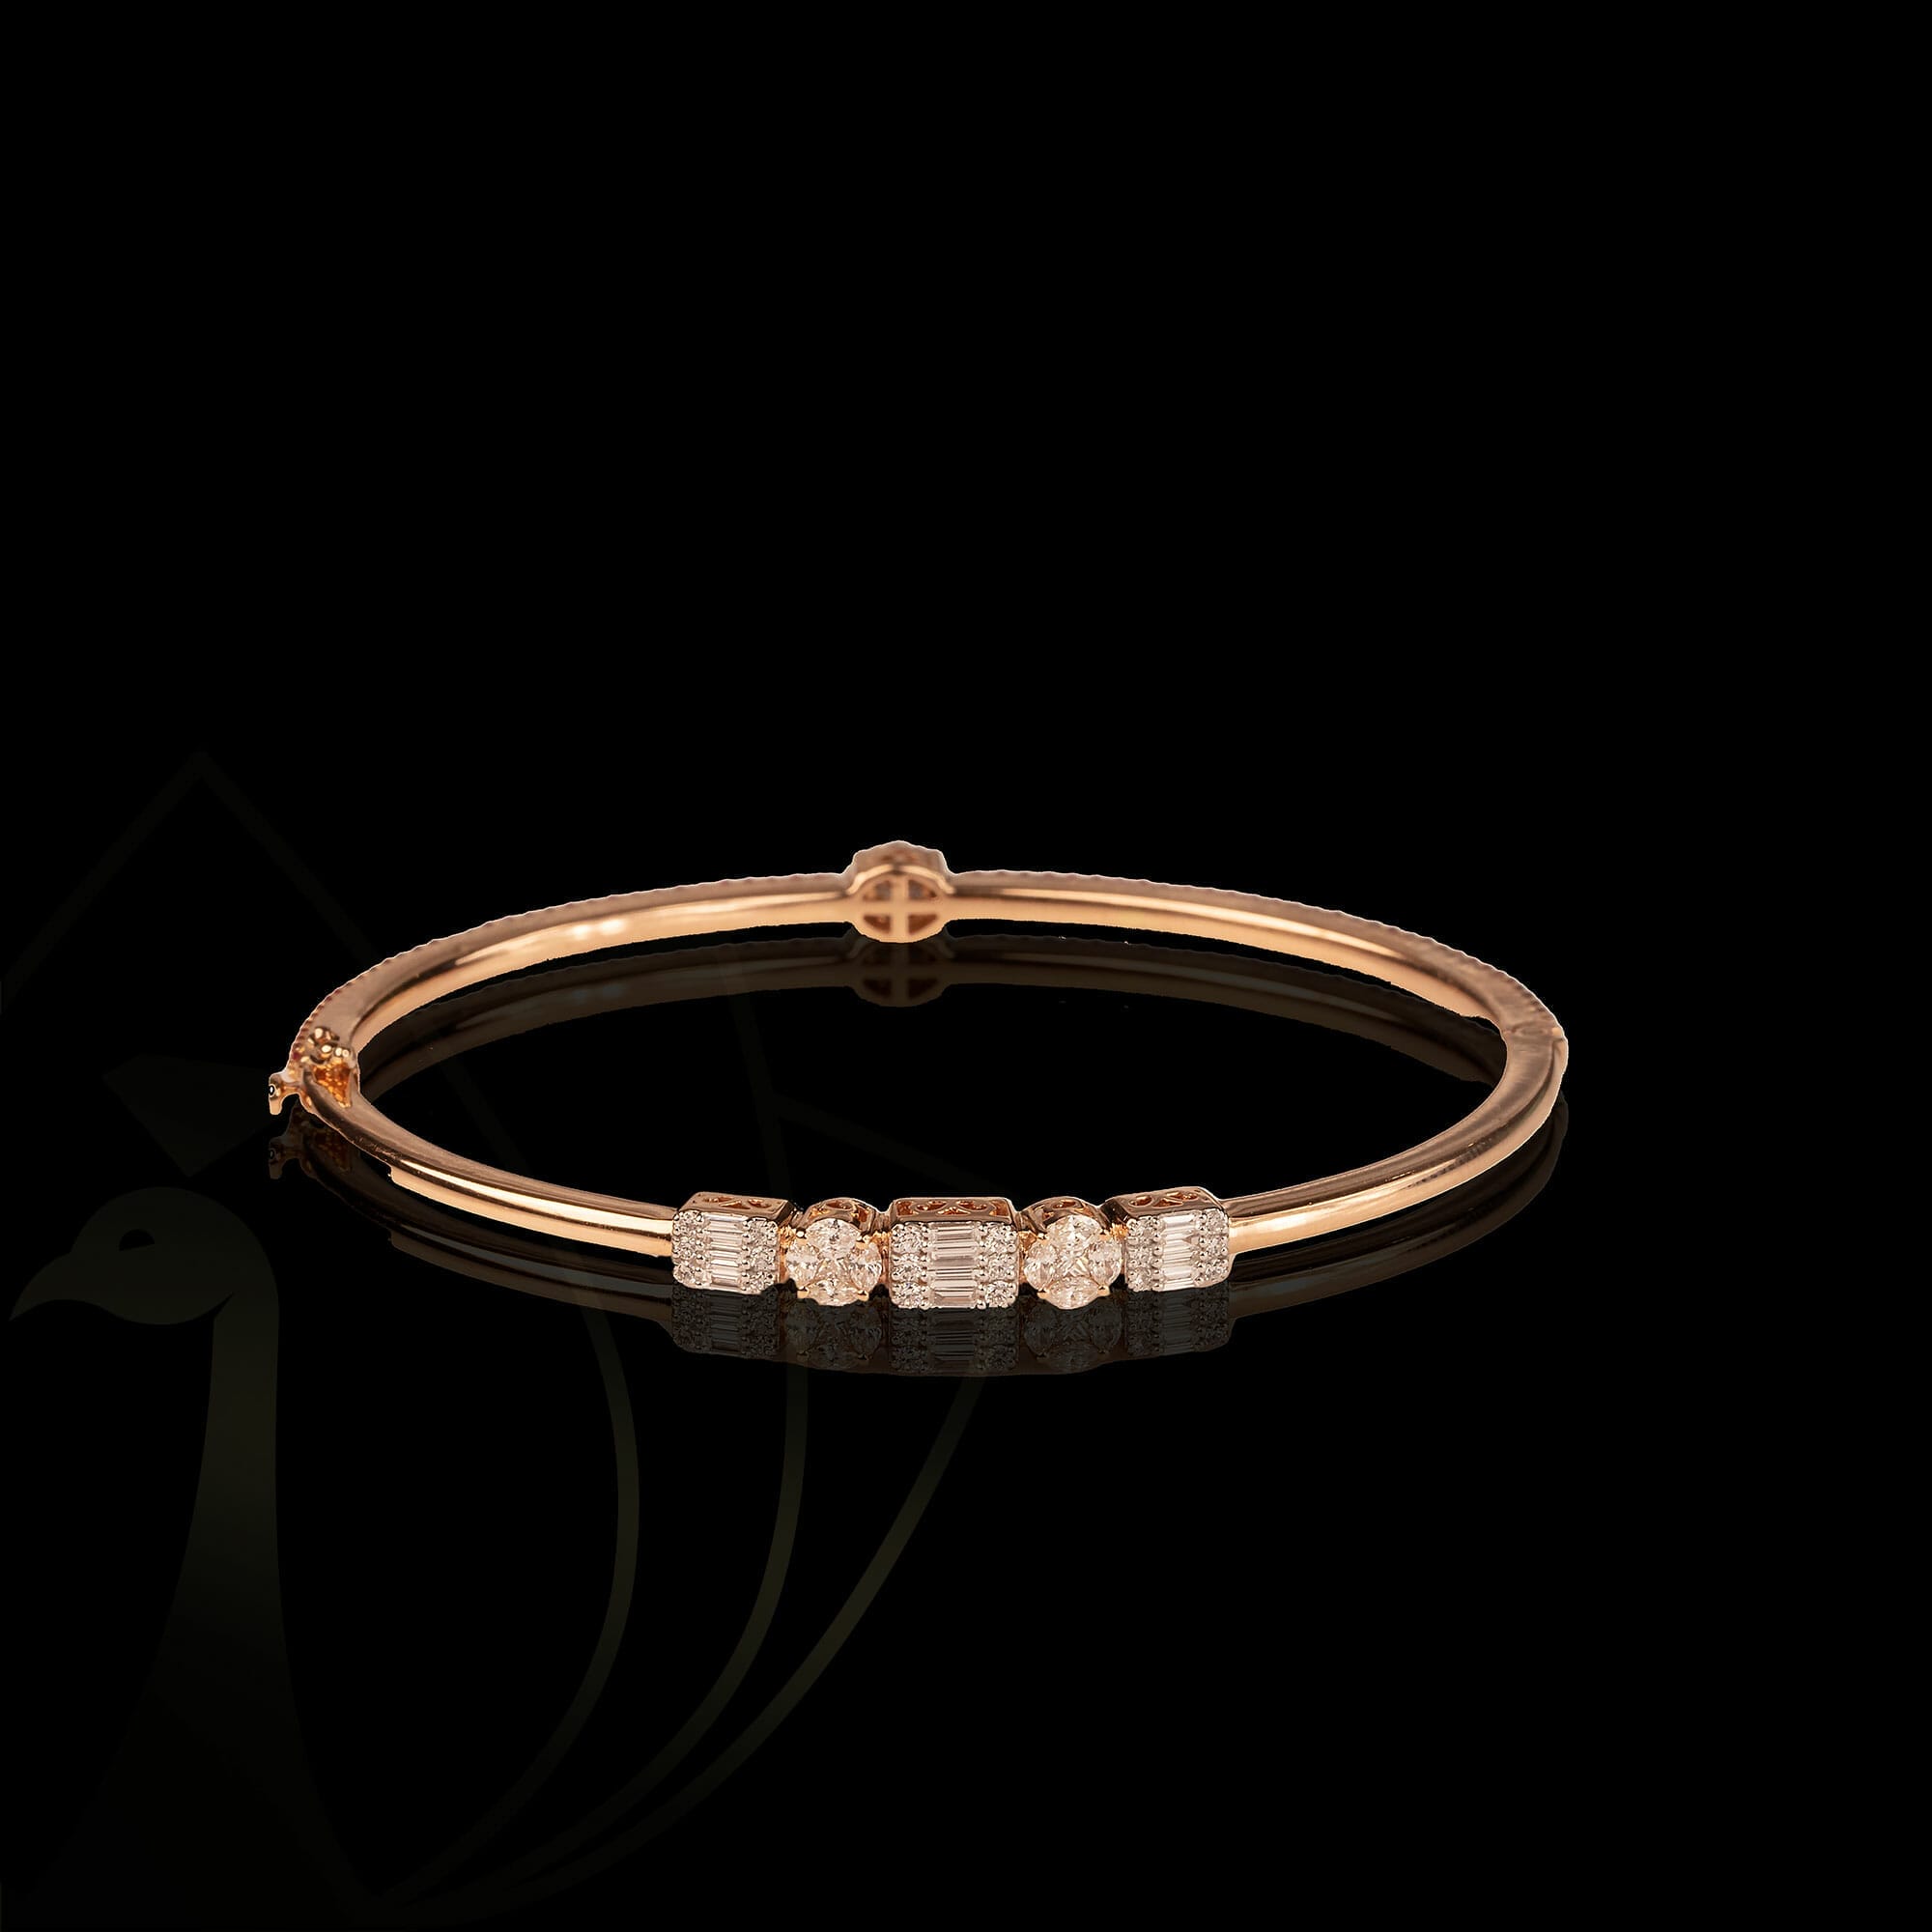 The romantic rhapsody diamond bracelet.